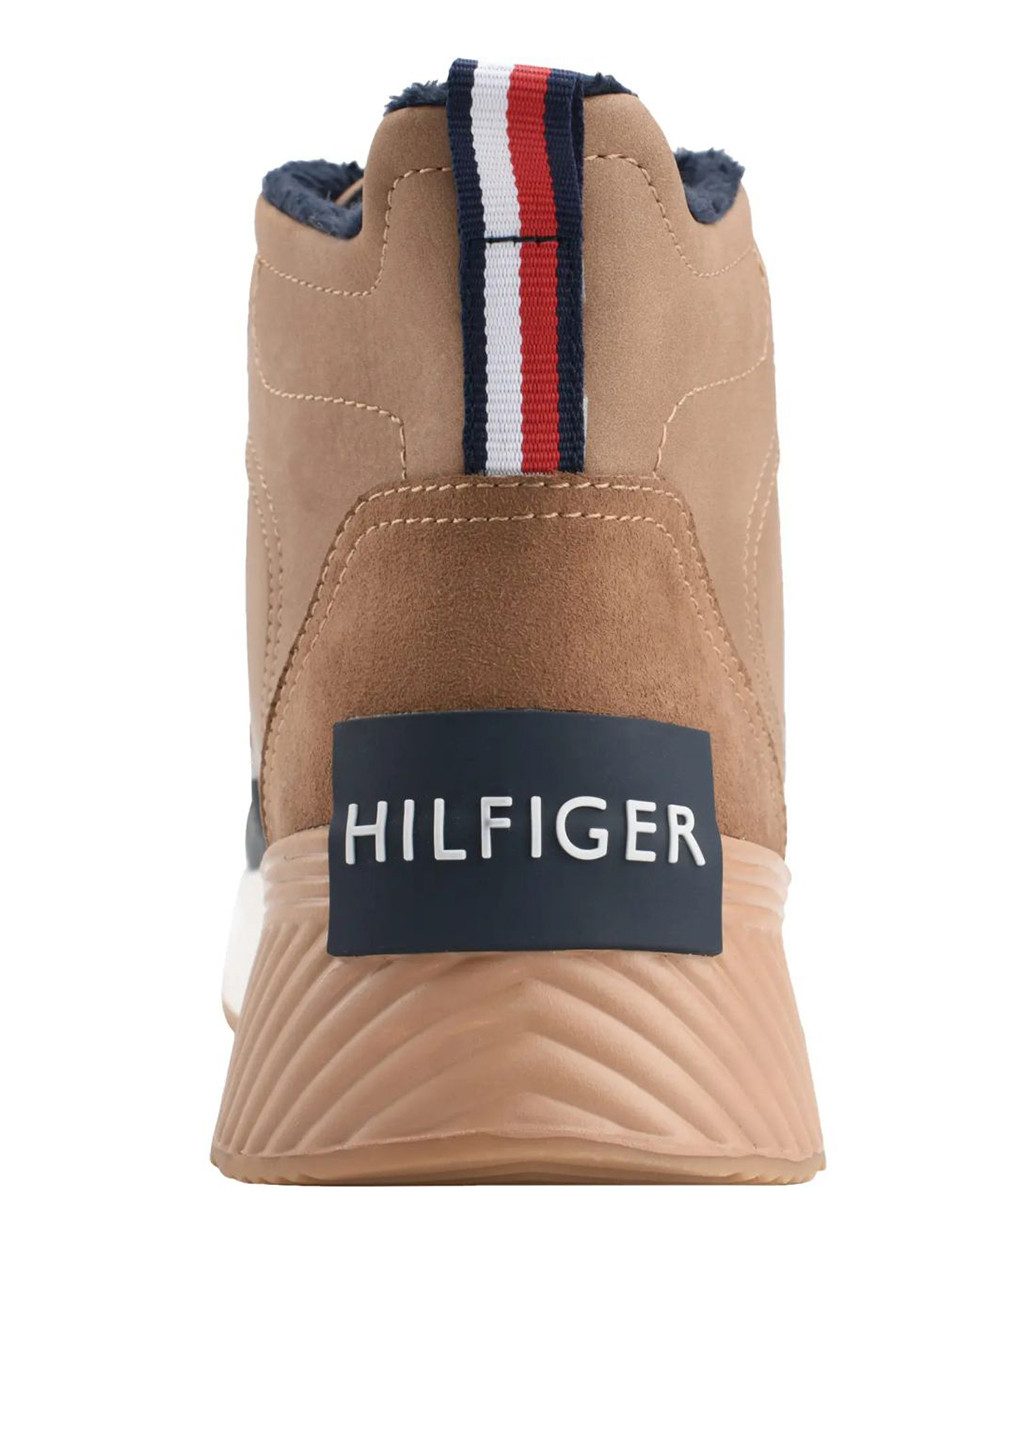 Осенние ботинки Tommy Hilfiger с логотипом из искусственной кожи, из искусственной замши